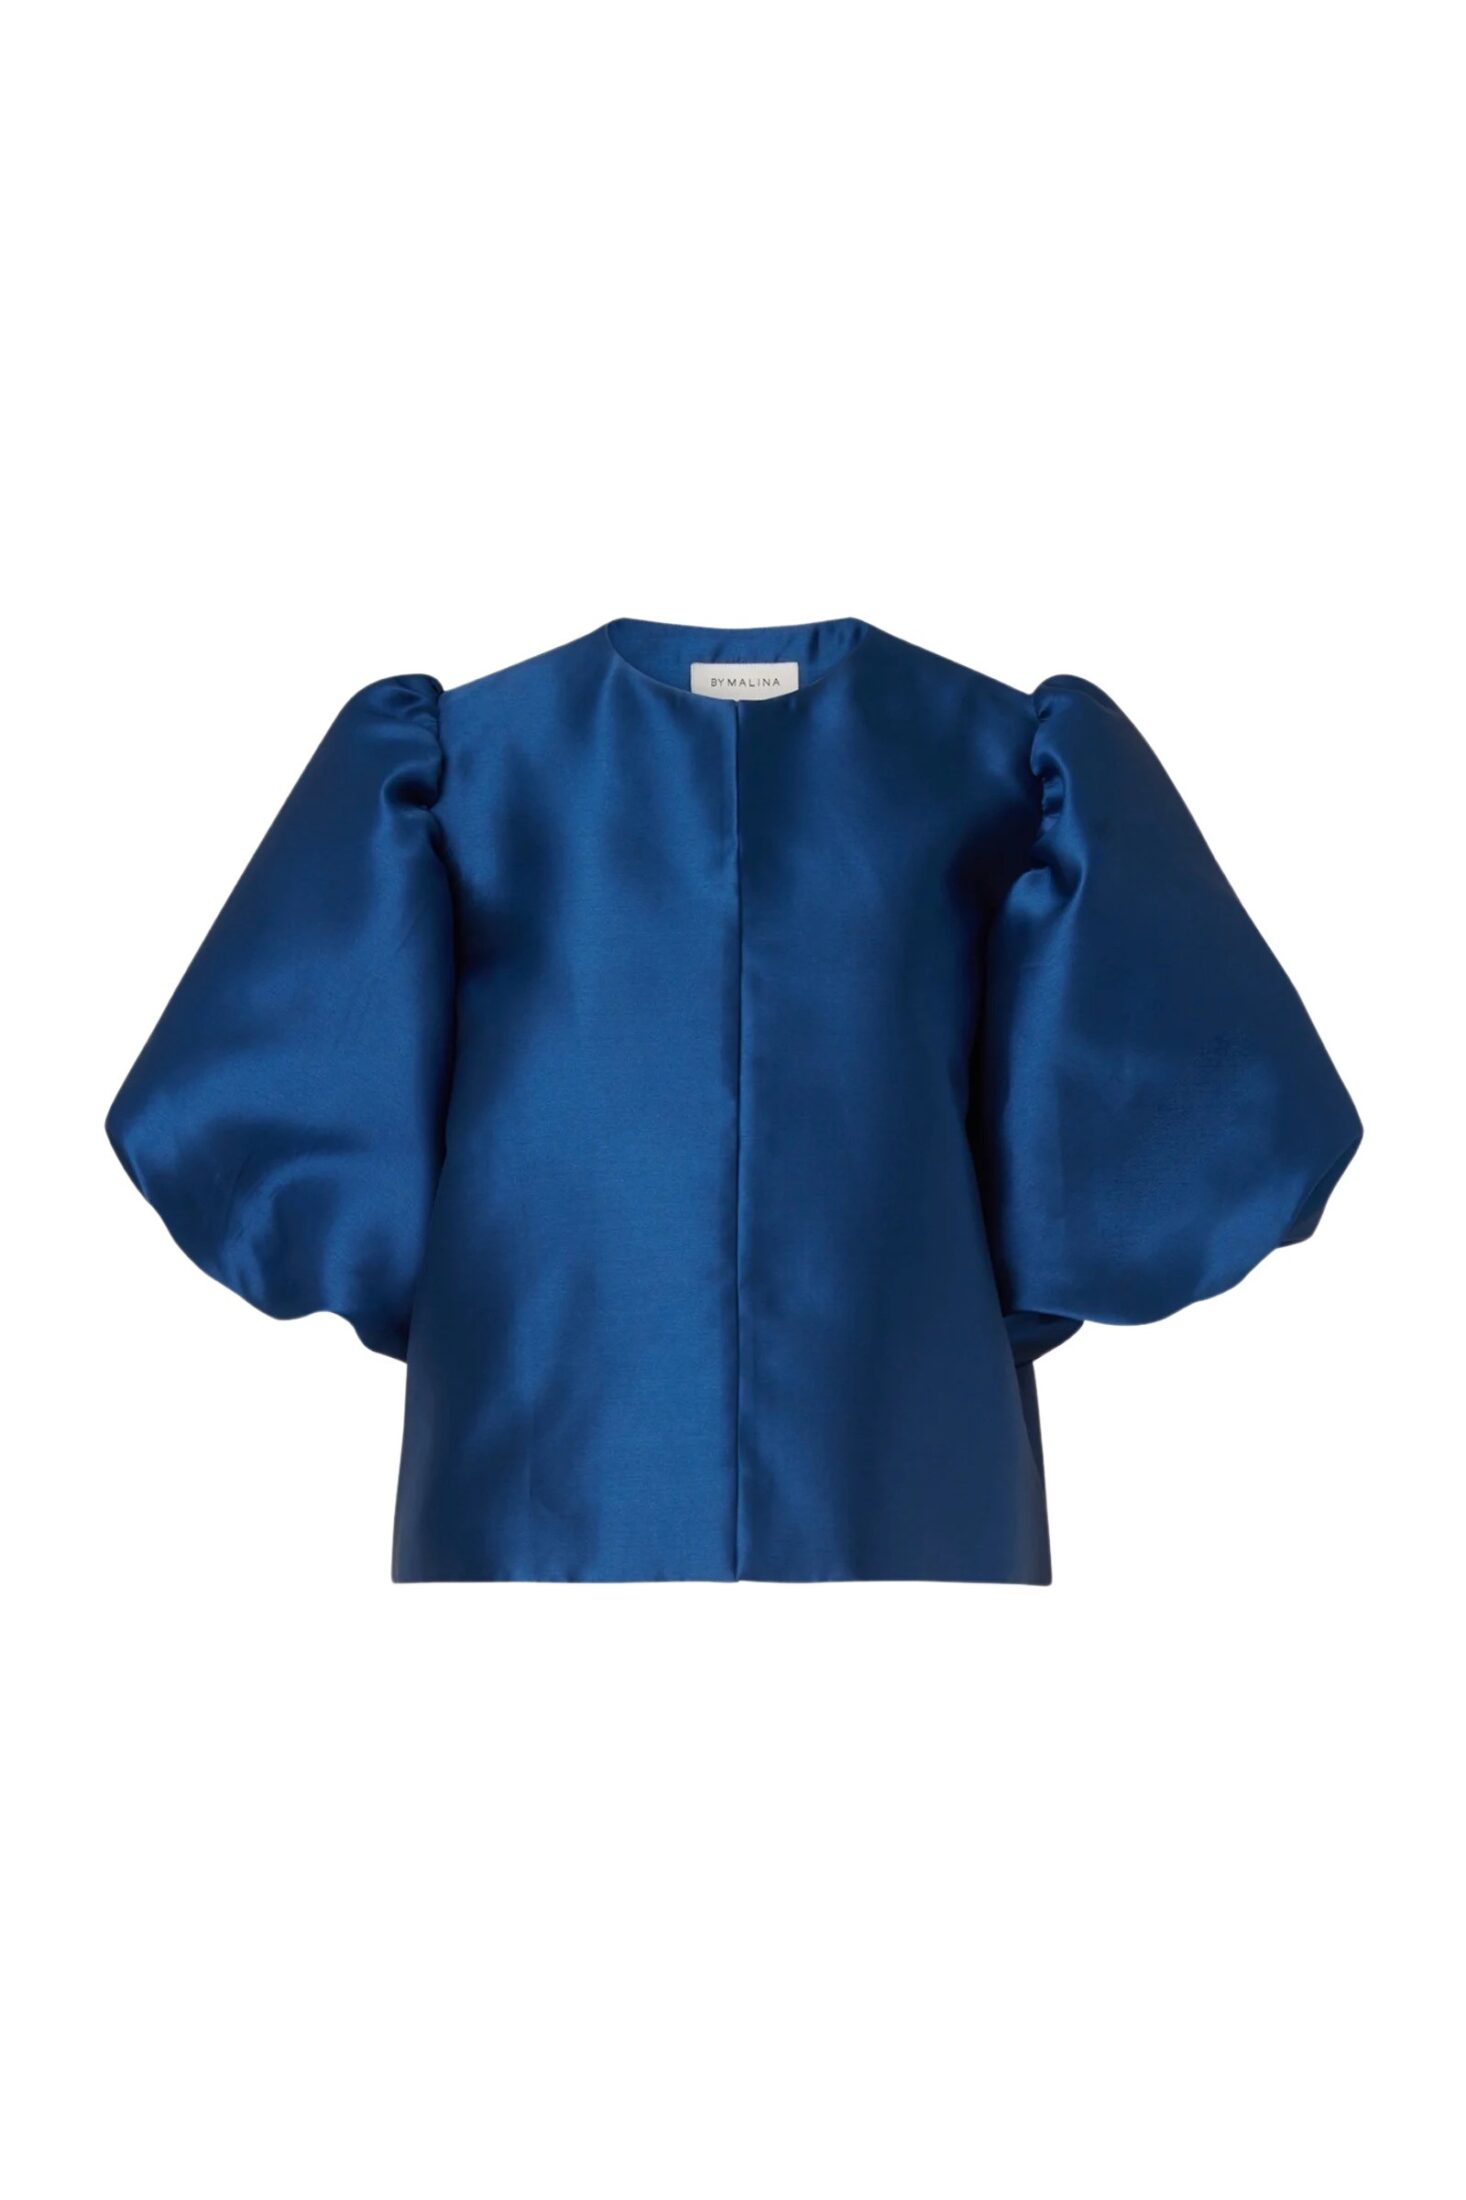 1491_e9e37af643-cleo-blouse-indigo-size1600